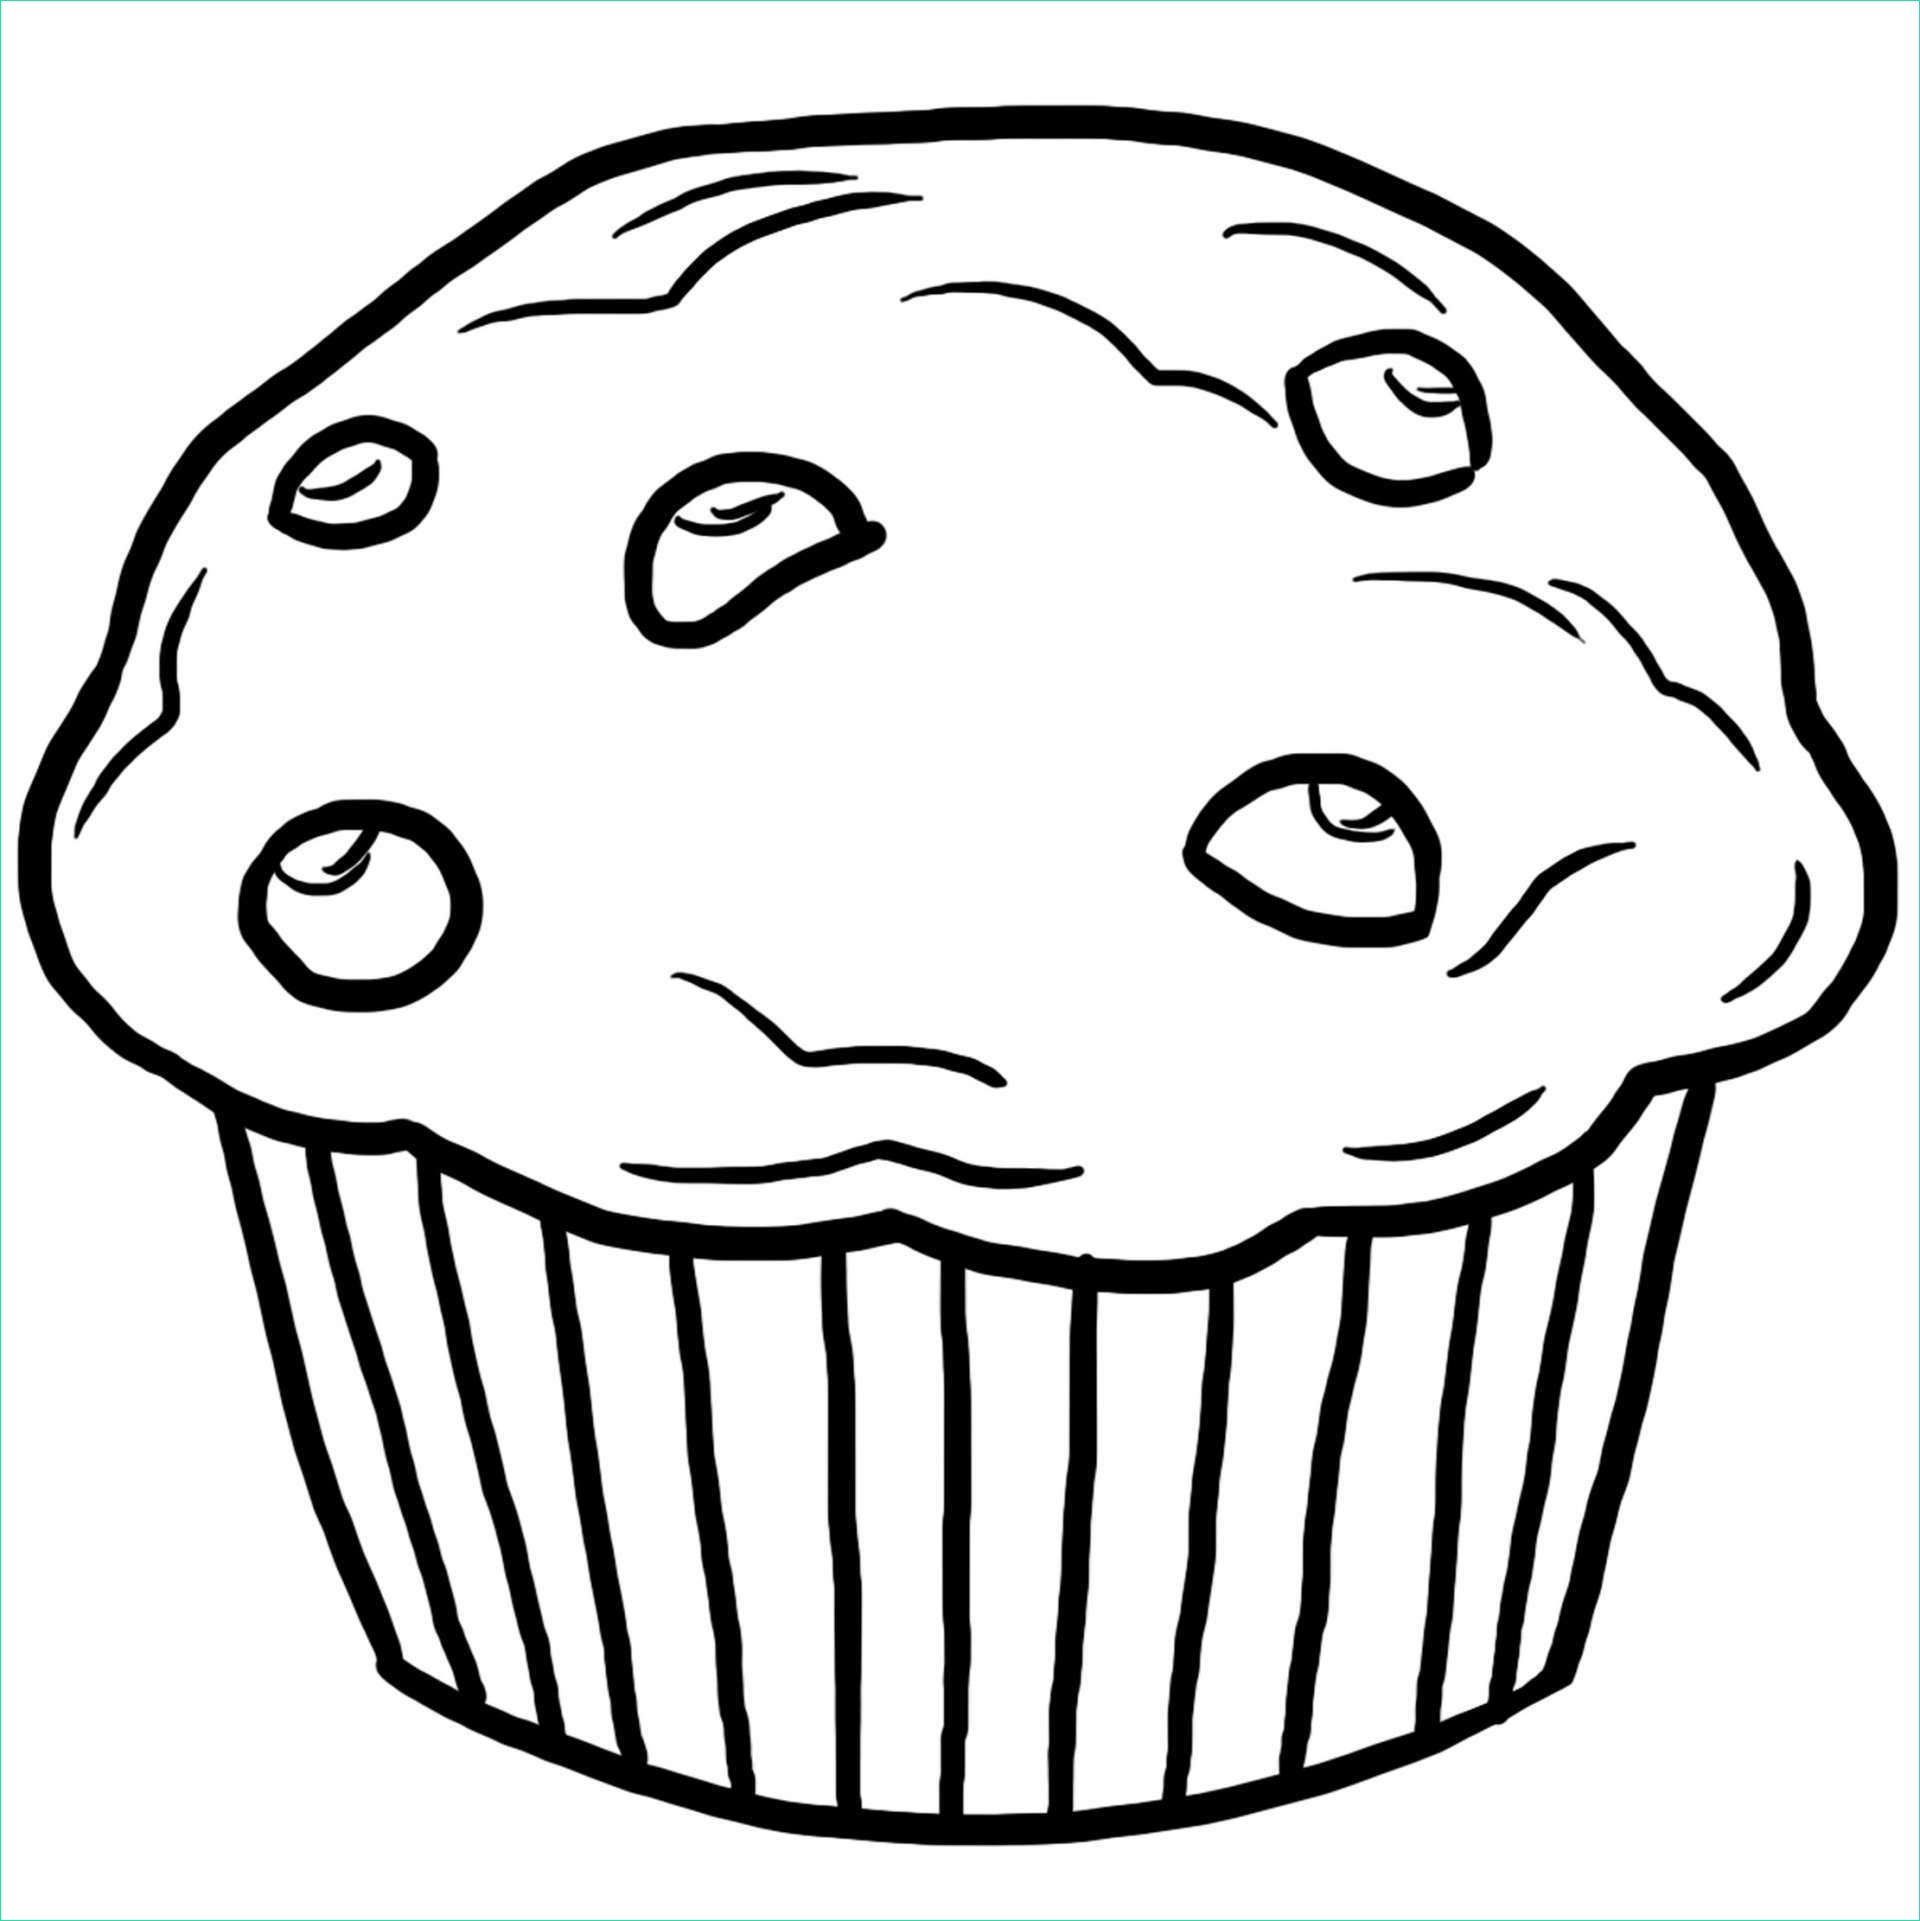 Coloriage De Cupcake Luxe Image Dessin Cupcake Unique S Coloriage Des Aliments Muffin